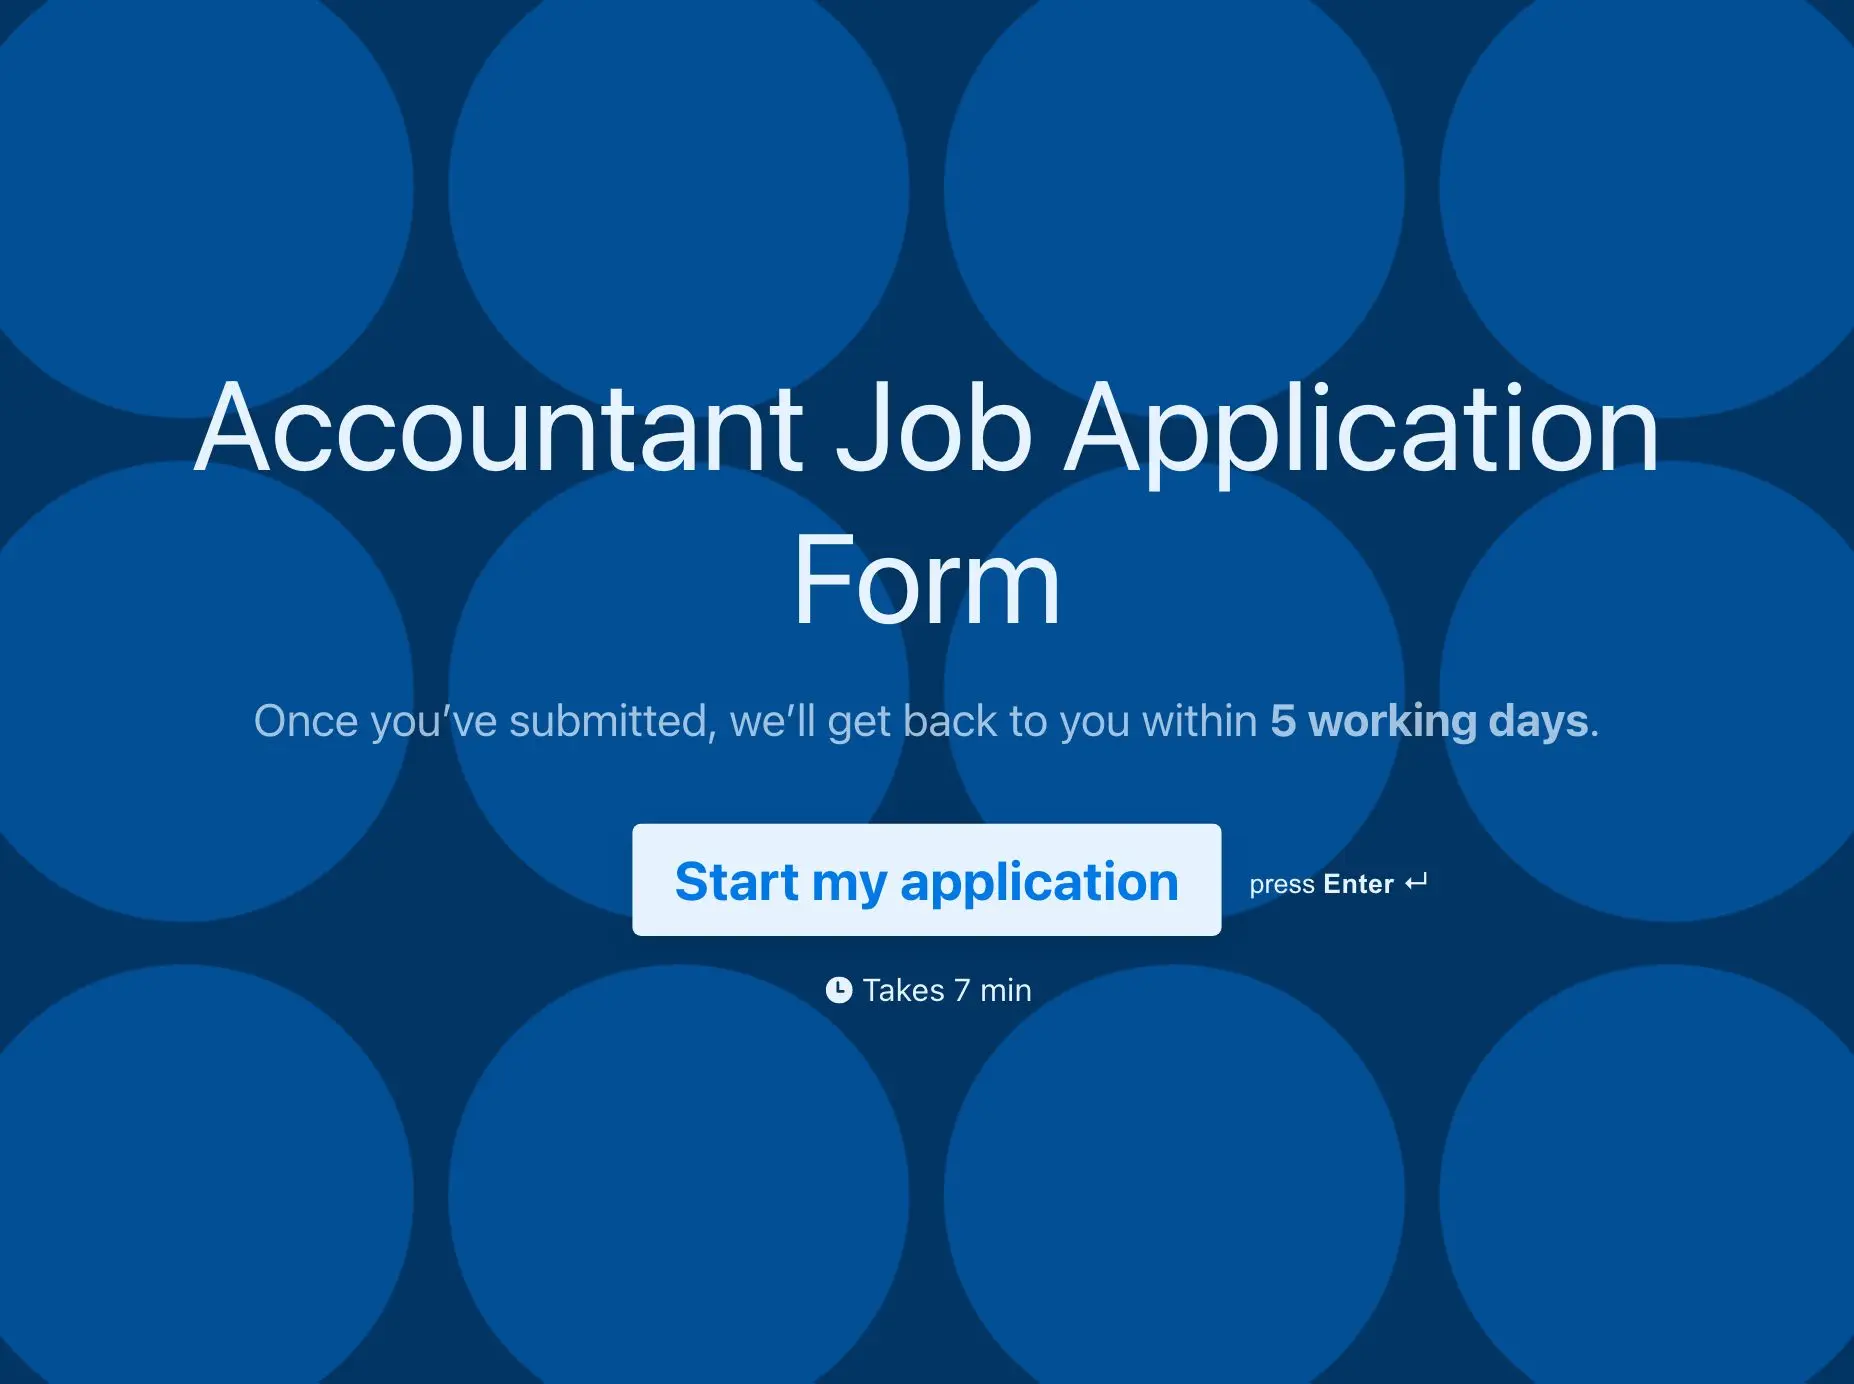 Accountant Job Application Form Template Hero